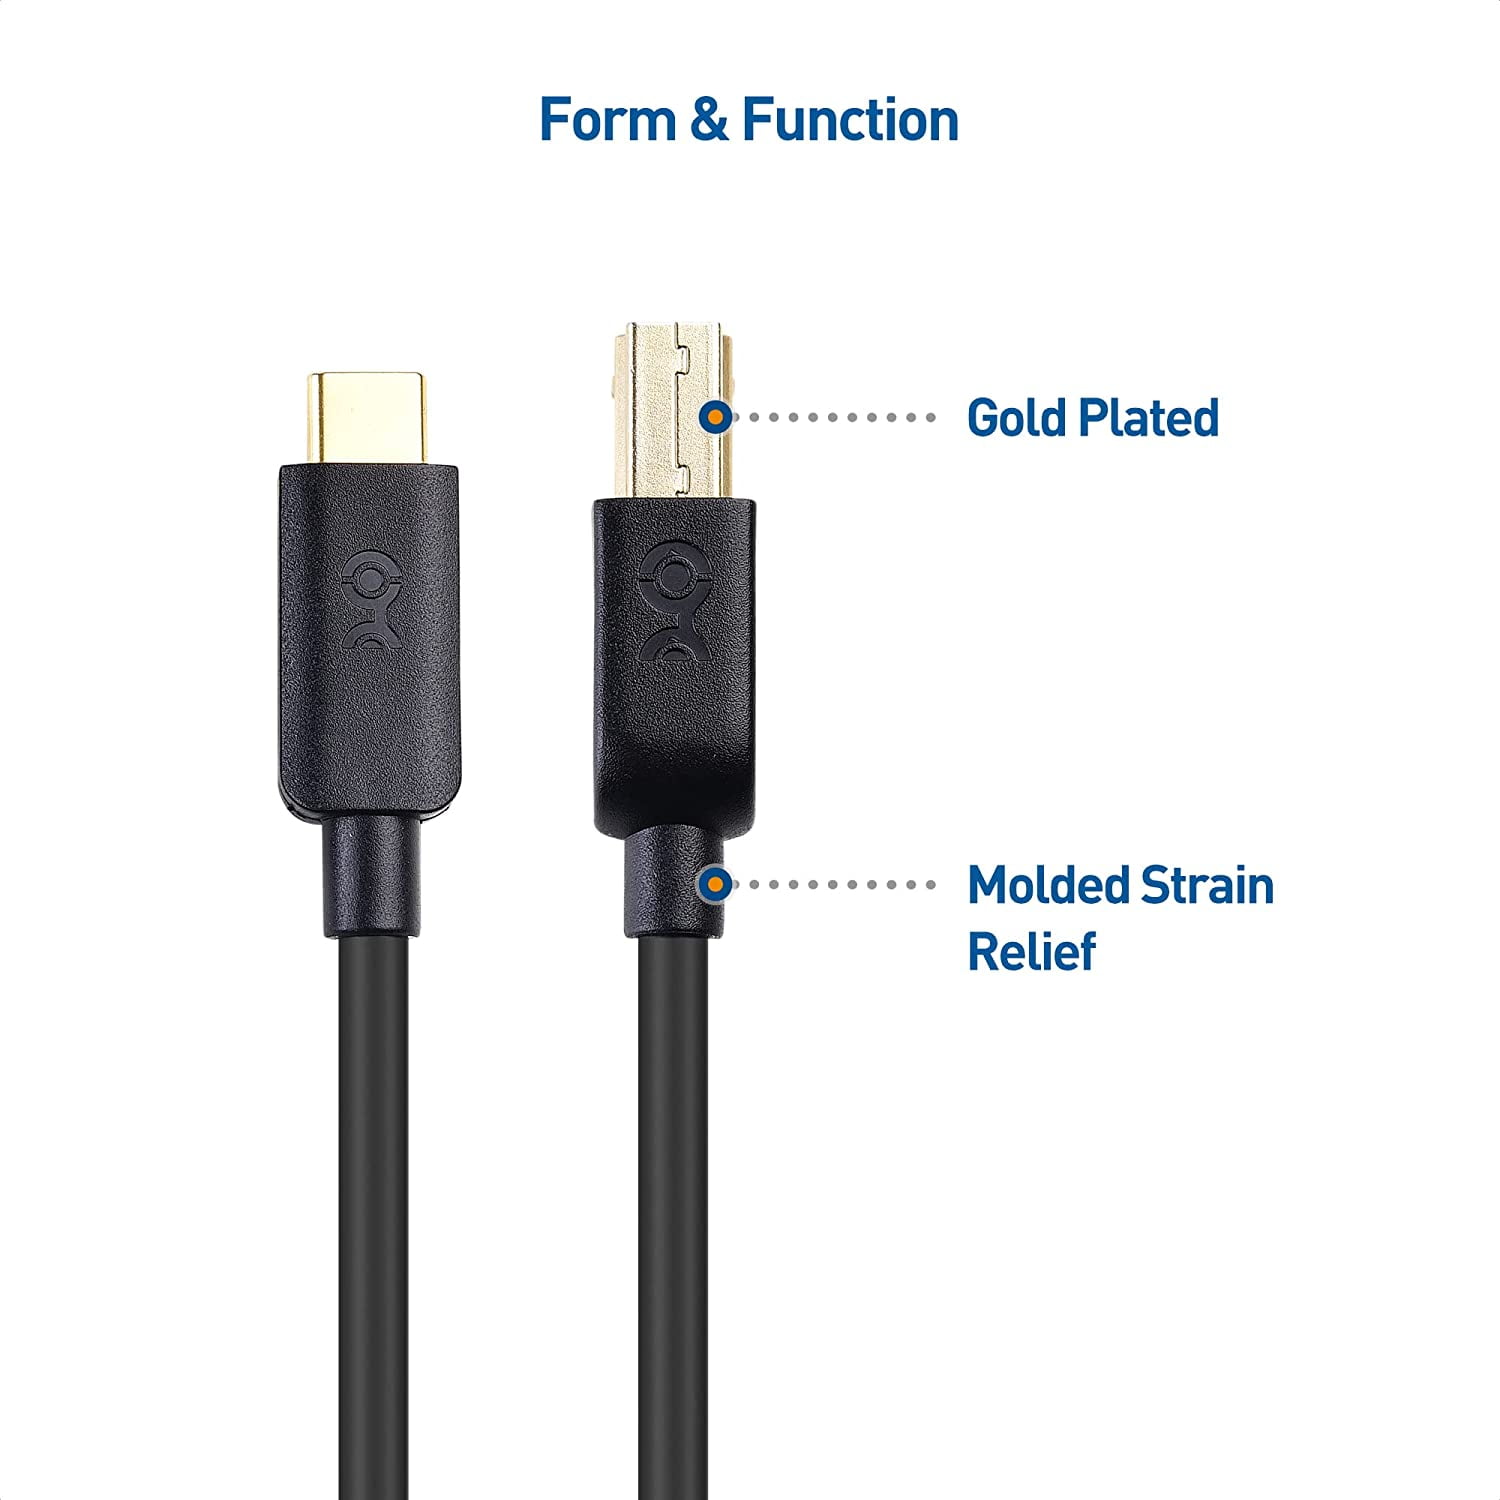 Cable USB 3.1 RS PRO con B. USB C Hembra, long. 1m